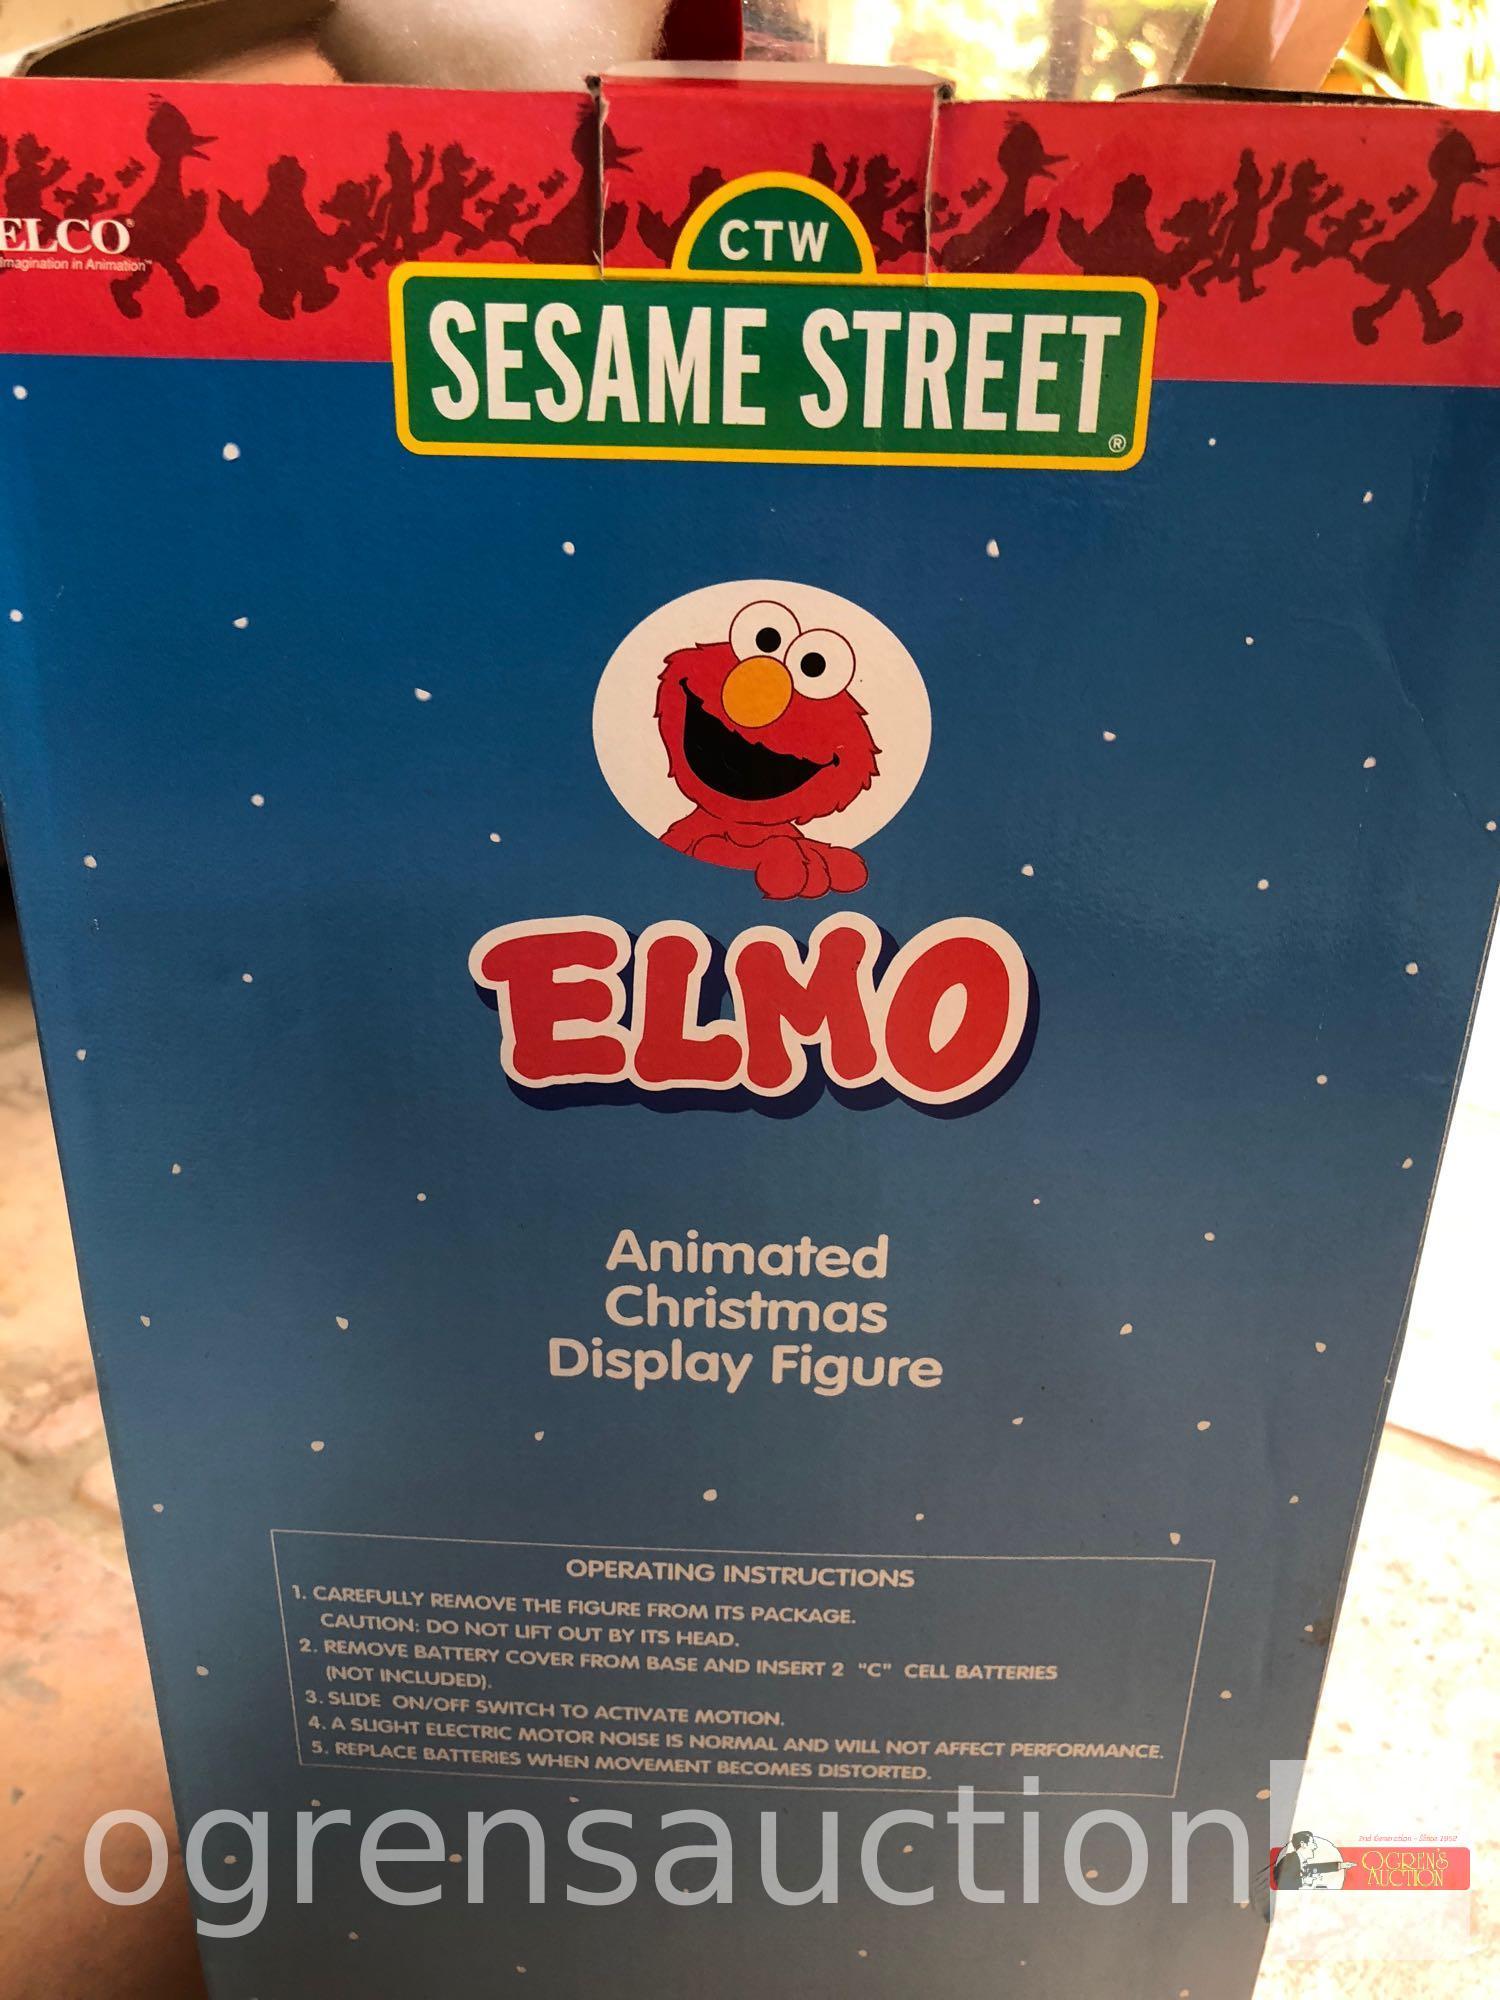 Christmas animated display figure - Sesame Street "Elmo", new in box, 16"h